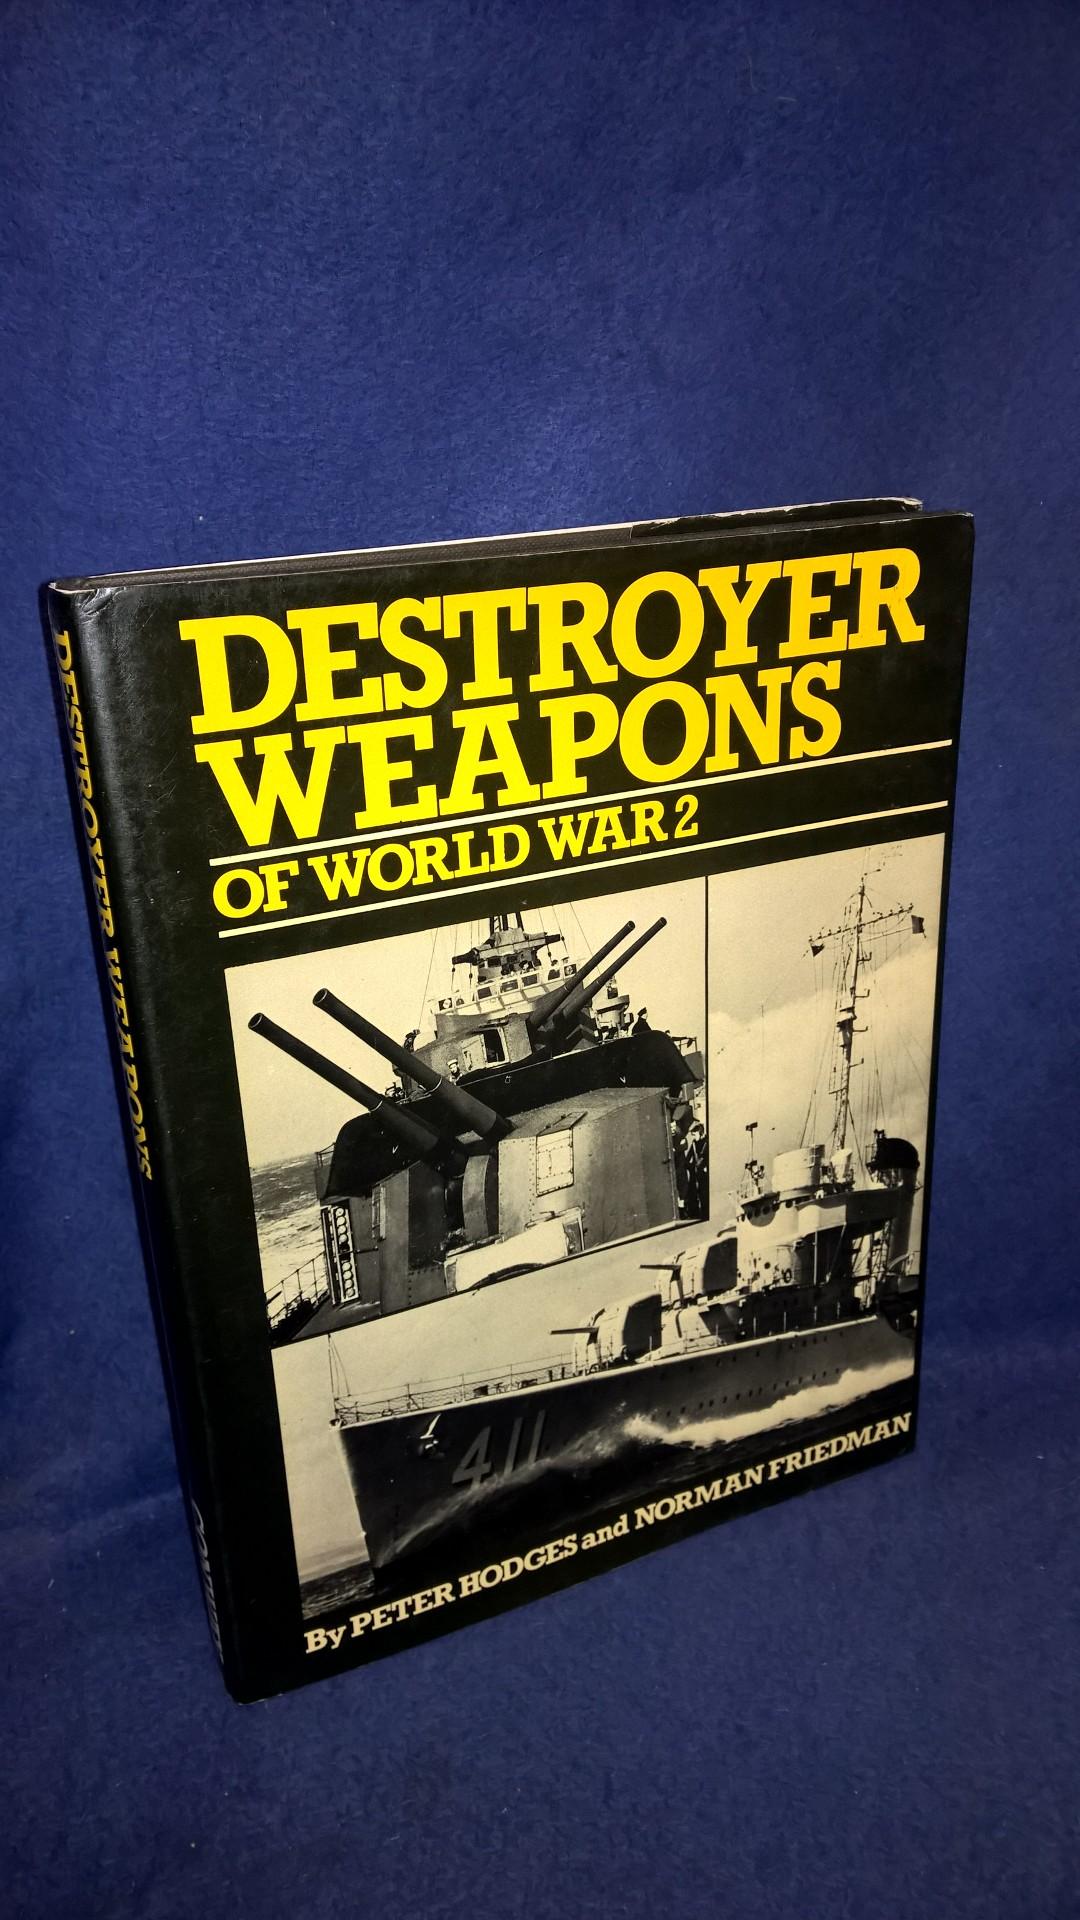 Destroyer Weapons of World War II.